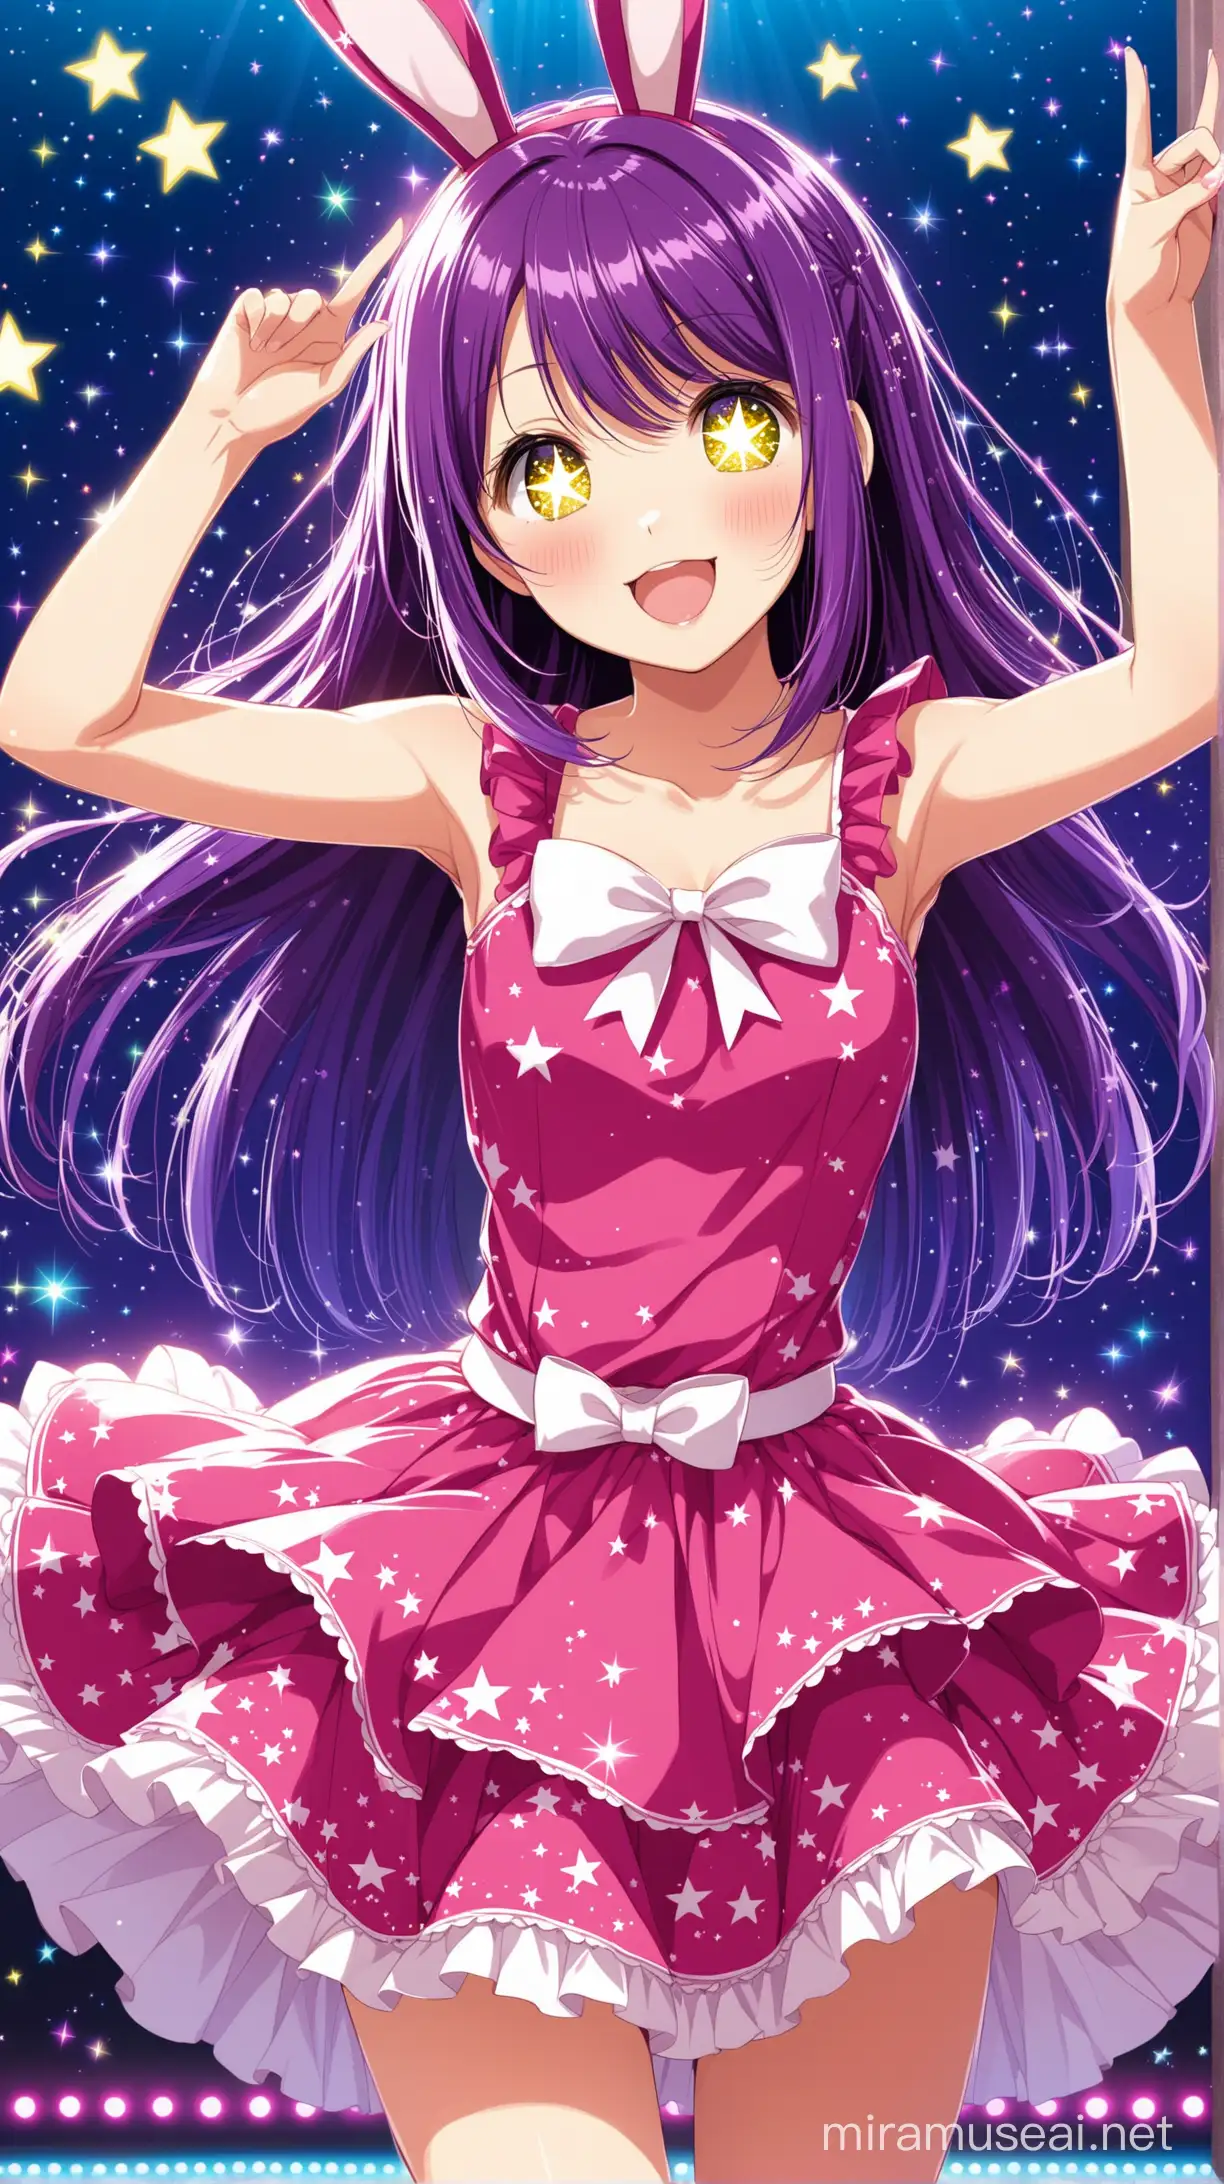 Ai Hoshino, "Oshi no ko", long purple hair, a rabbit-shaped barrette, dancing, cute, stars on eyes, idol's costume